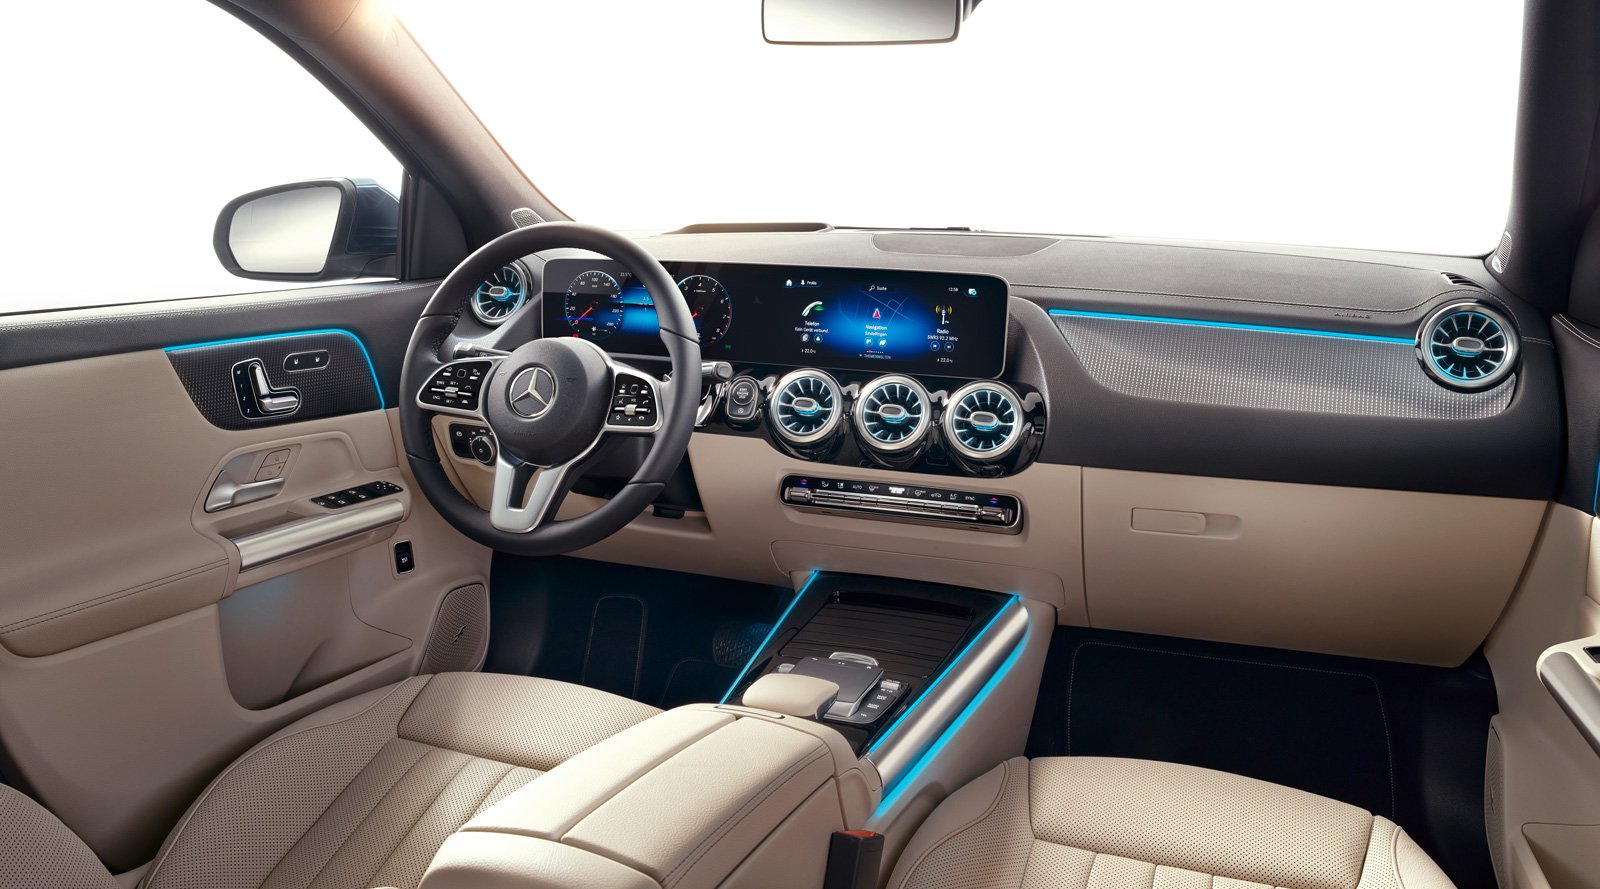 Nya Mercedes Gla Visad Kaxig Suv I Kompaktklassen Mercedes Benz Nyheter